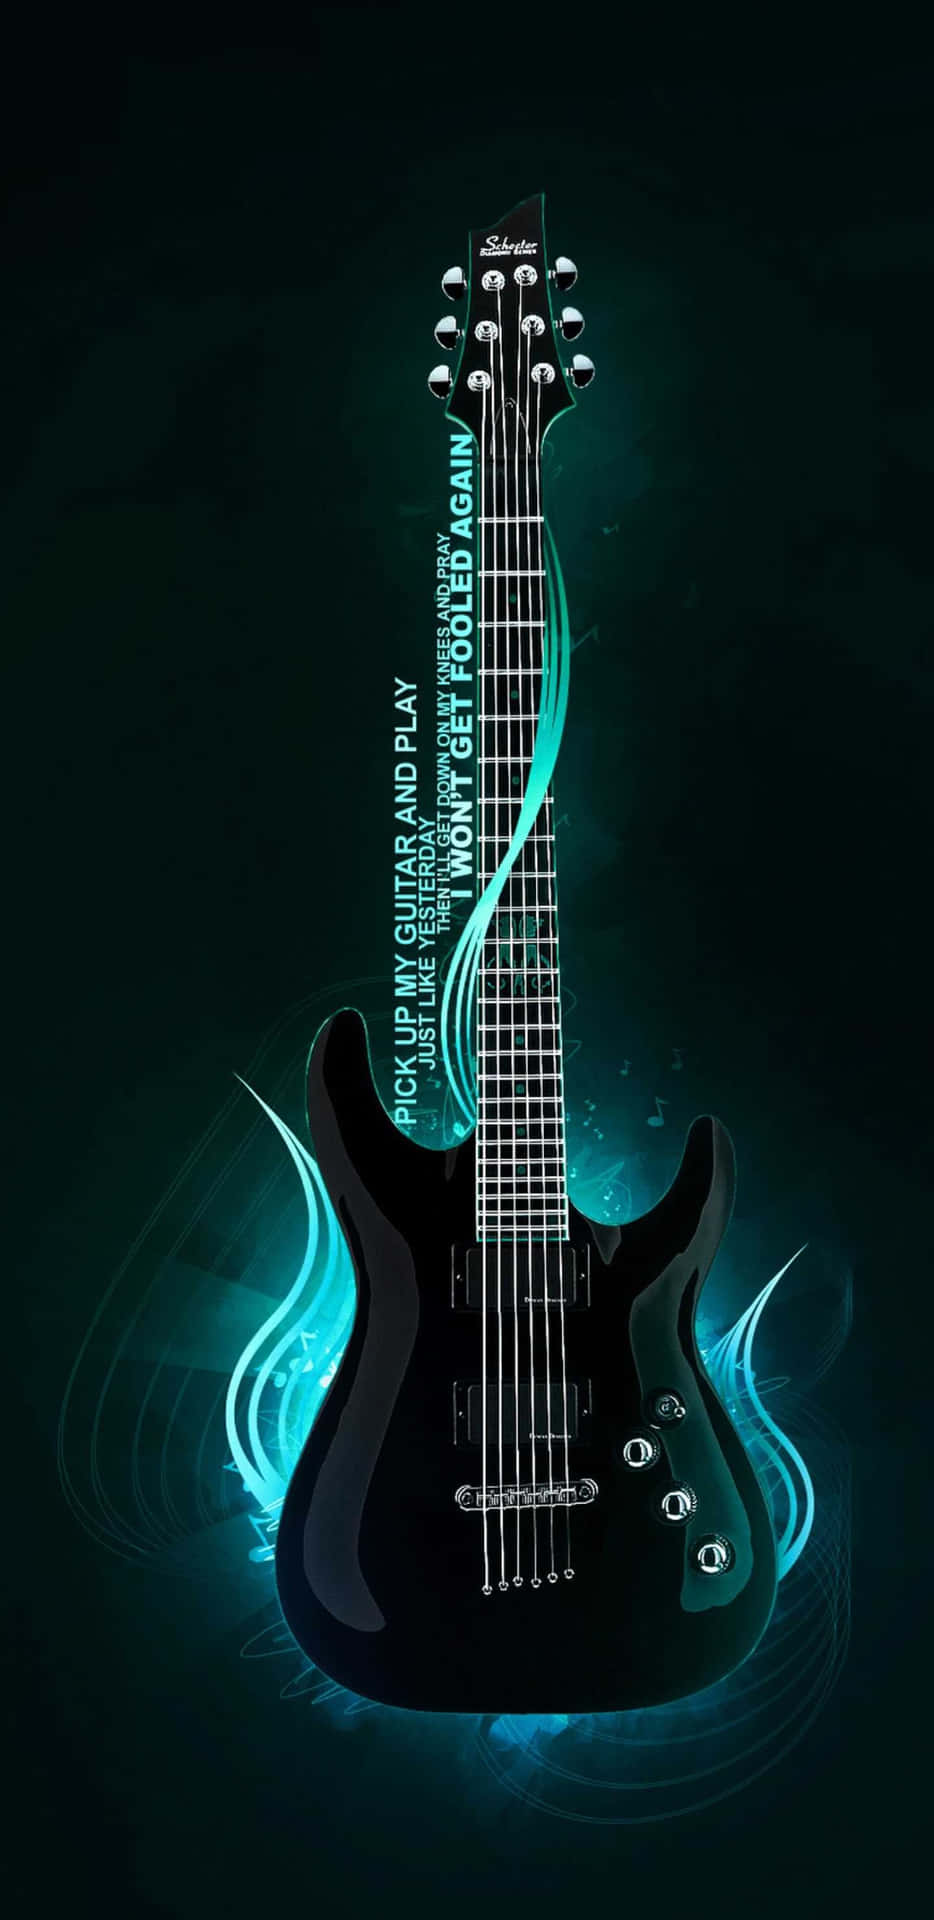 Eineschwarze E-gitarre Mit Blauen Flammen Wallpaper